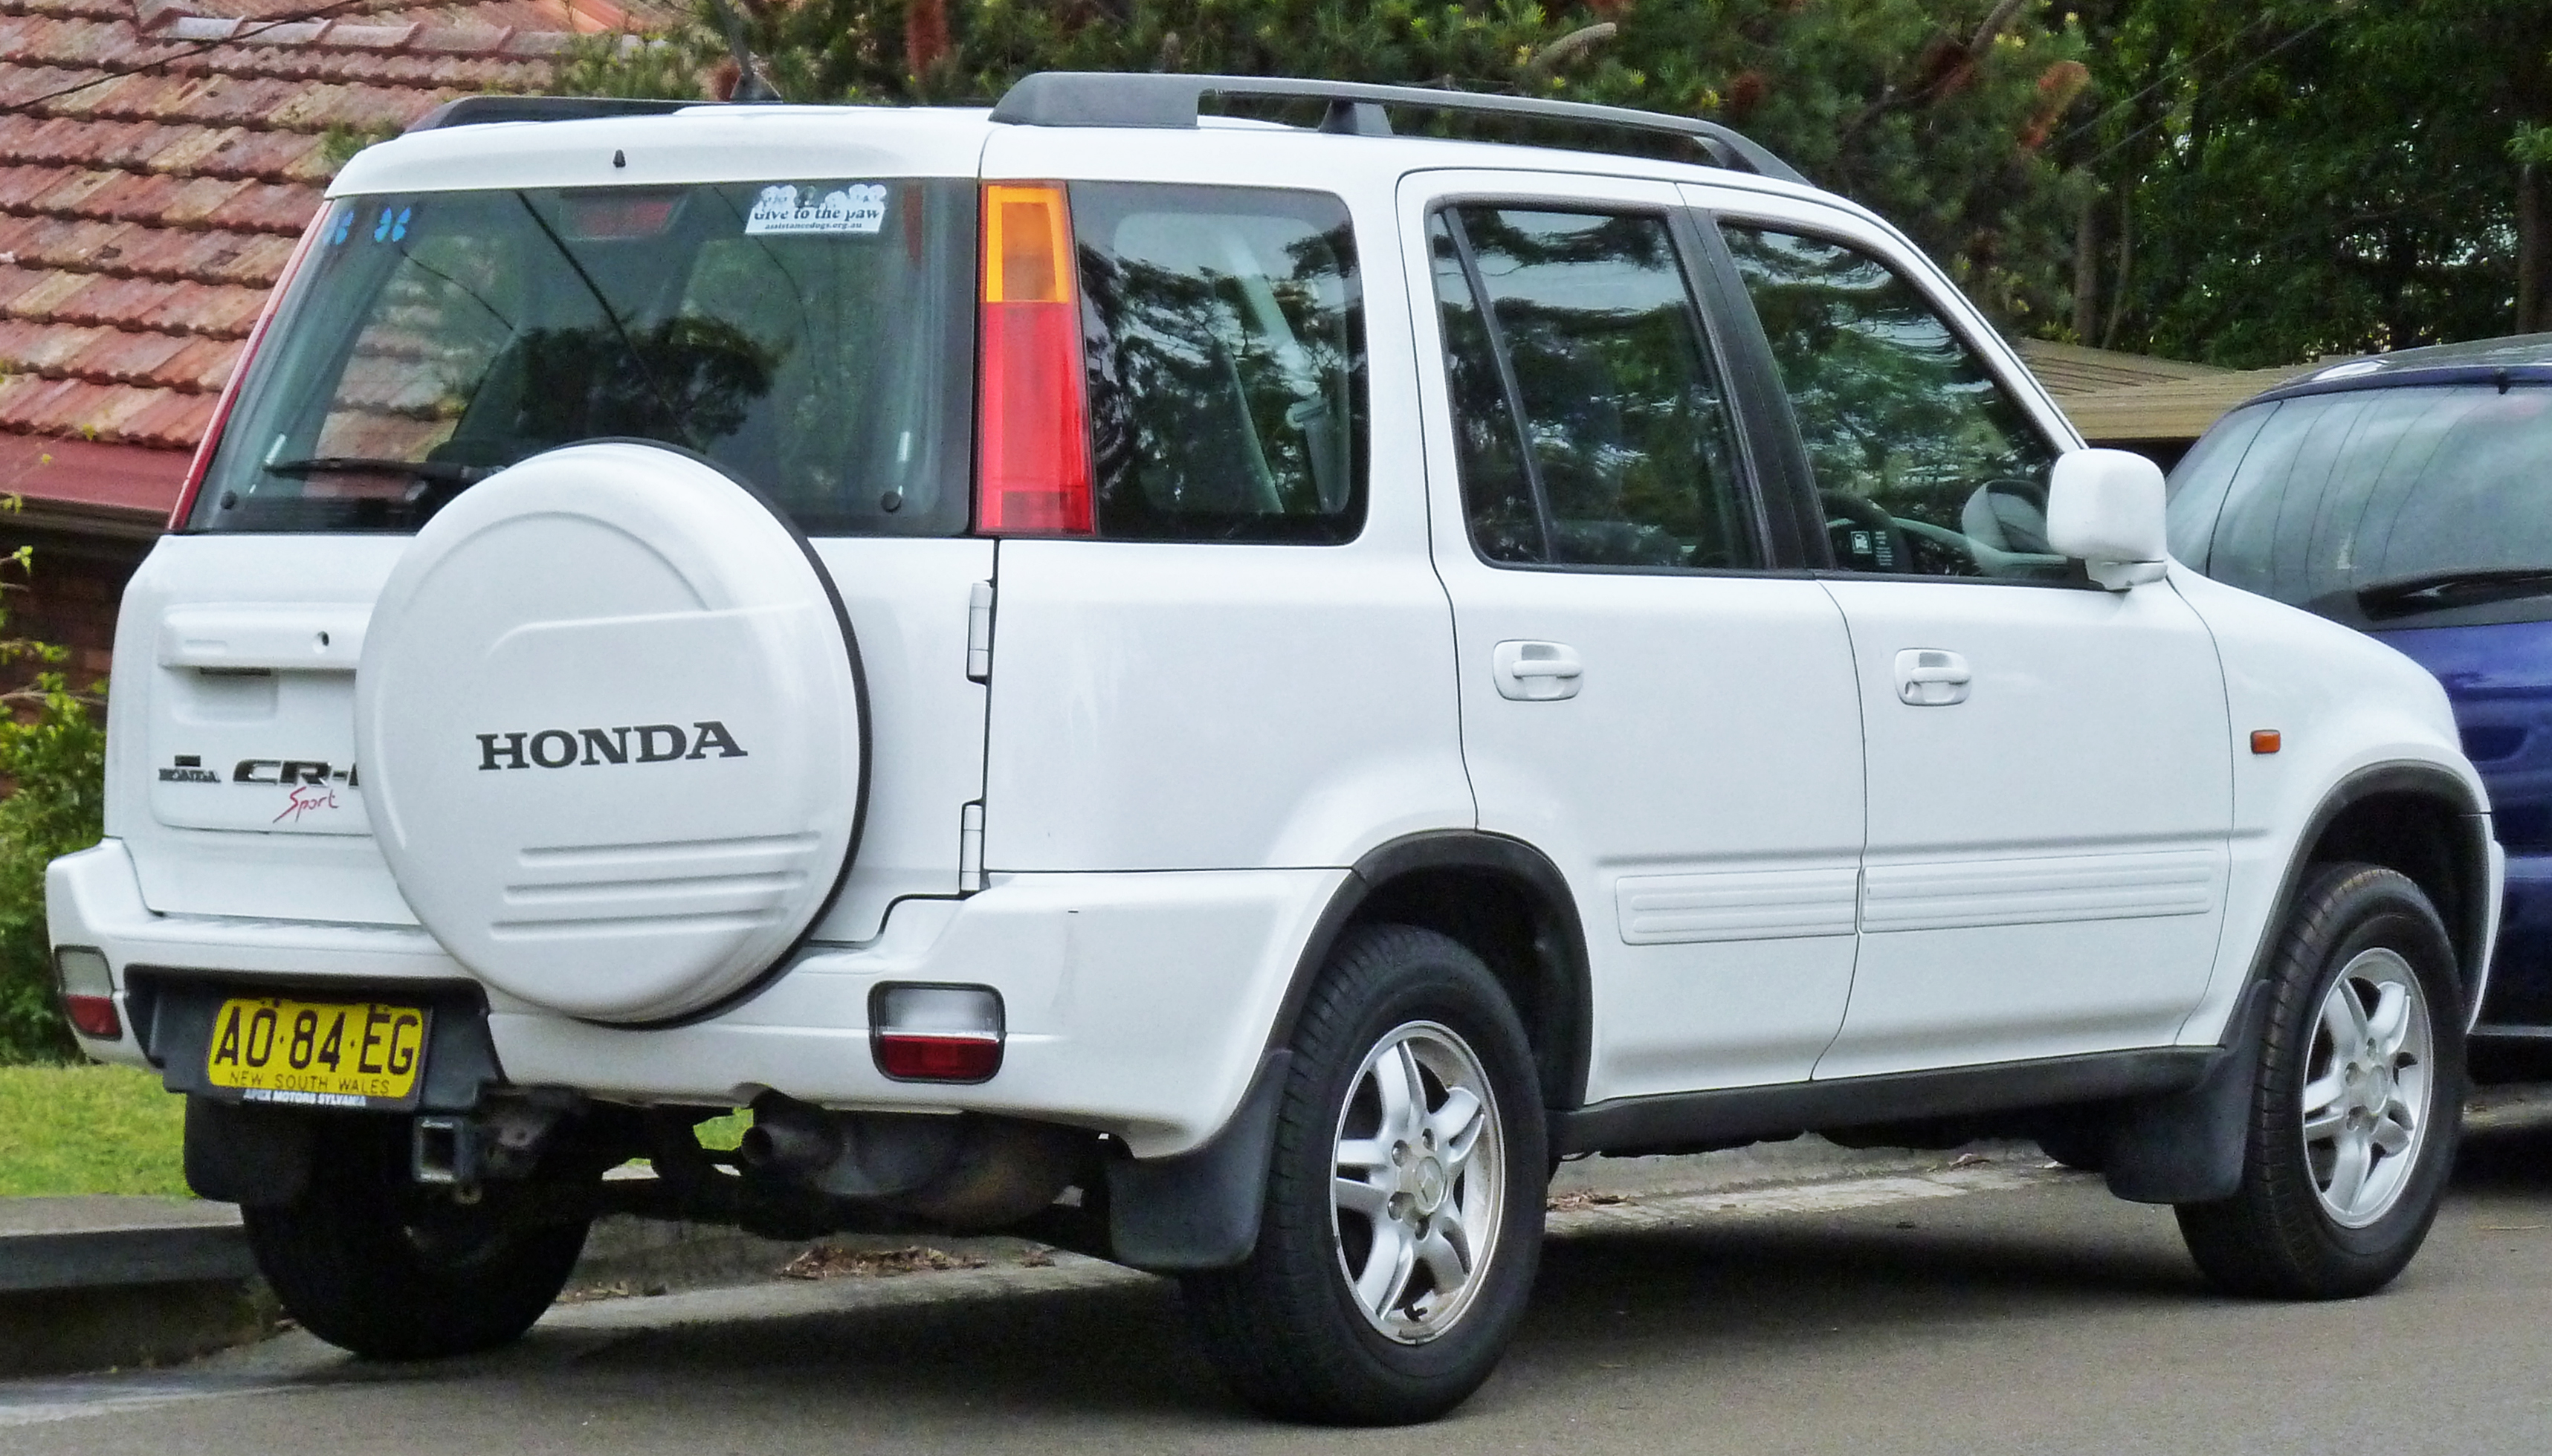 Хонда црв 2001 год. Honda CR-V 2000. Honda CR-V 1 1999. Хонда CRV 2000. Honda CRV 2000 год.